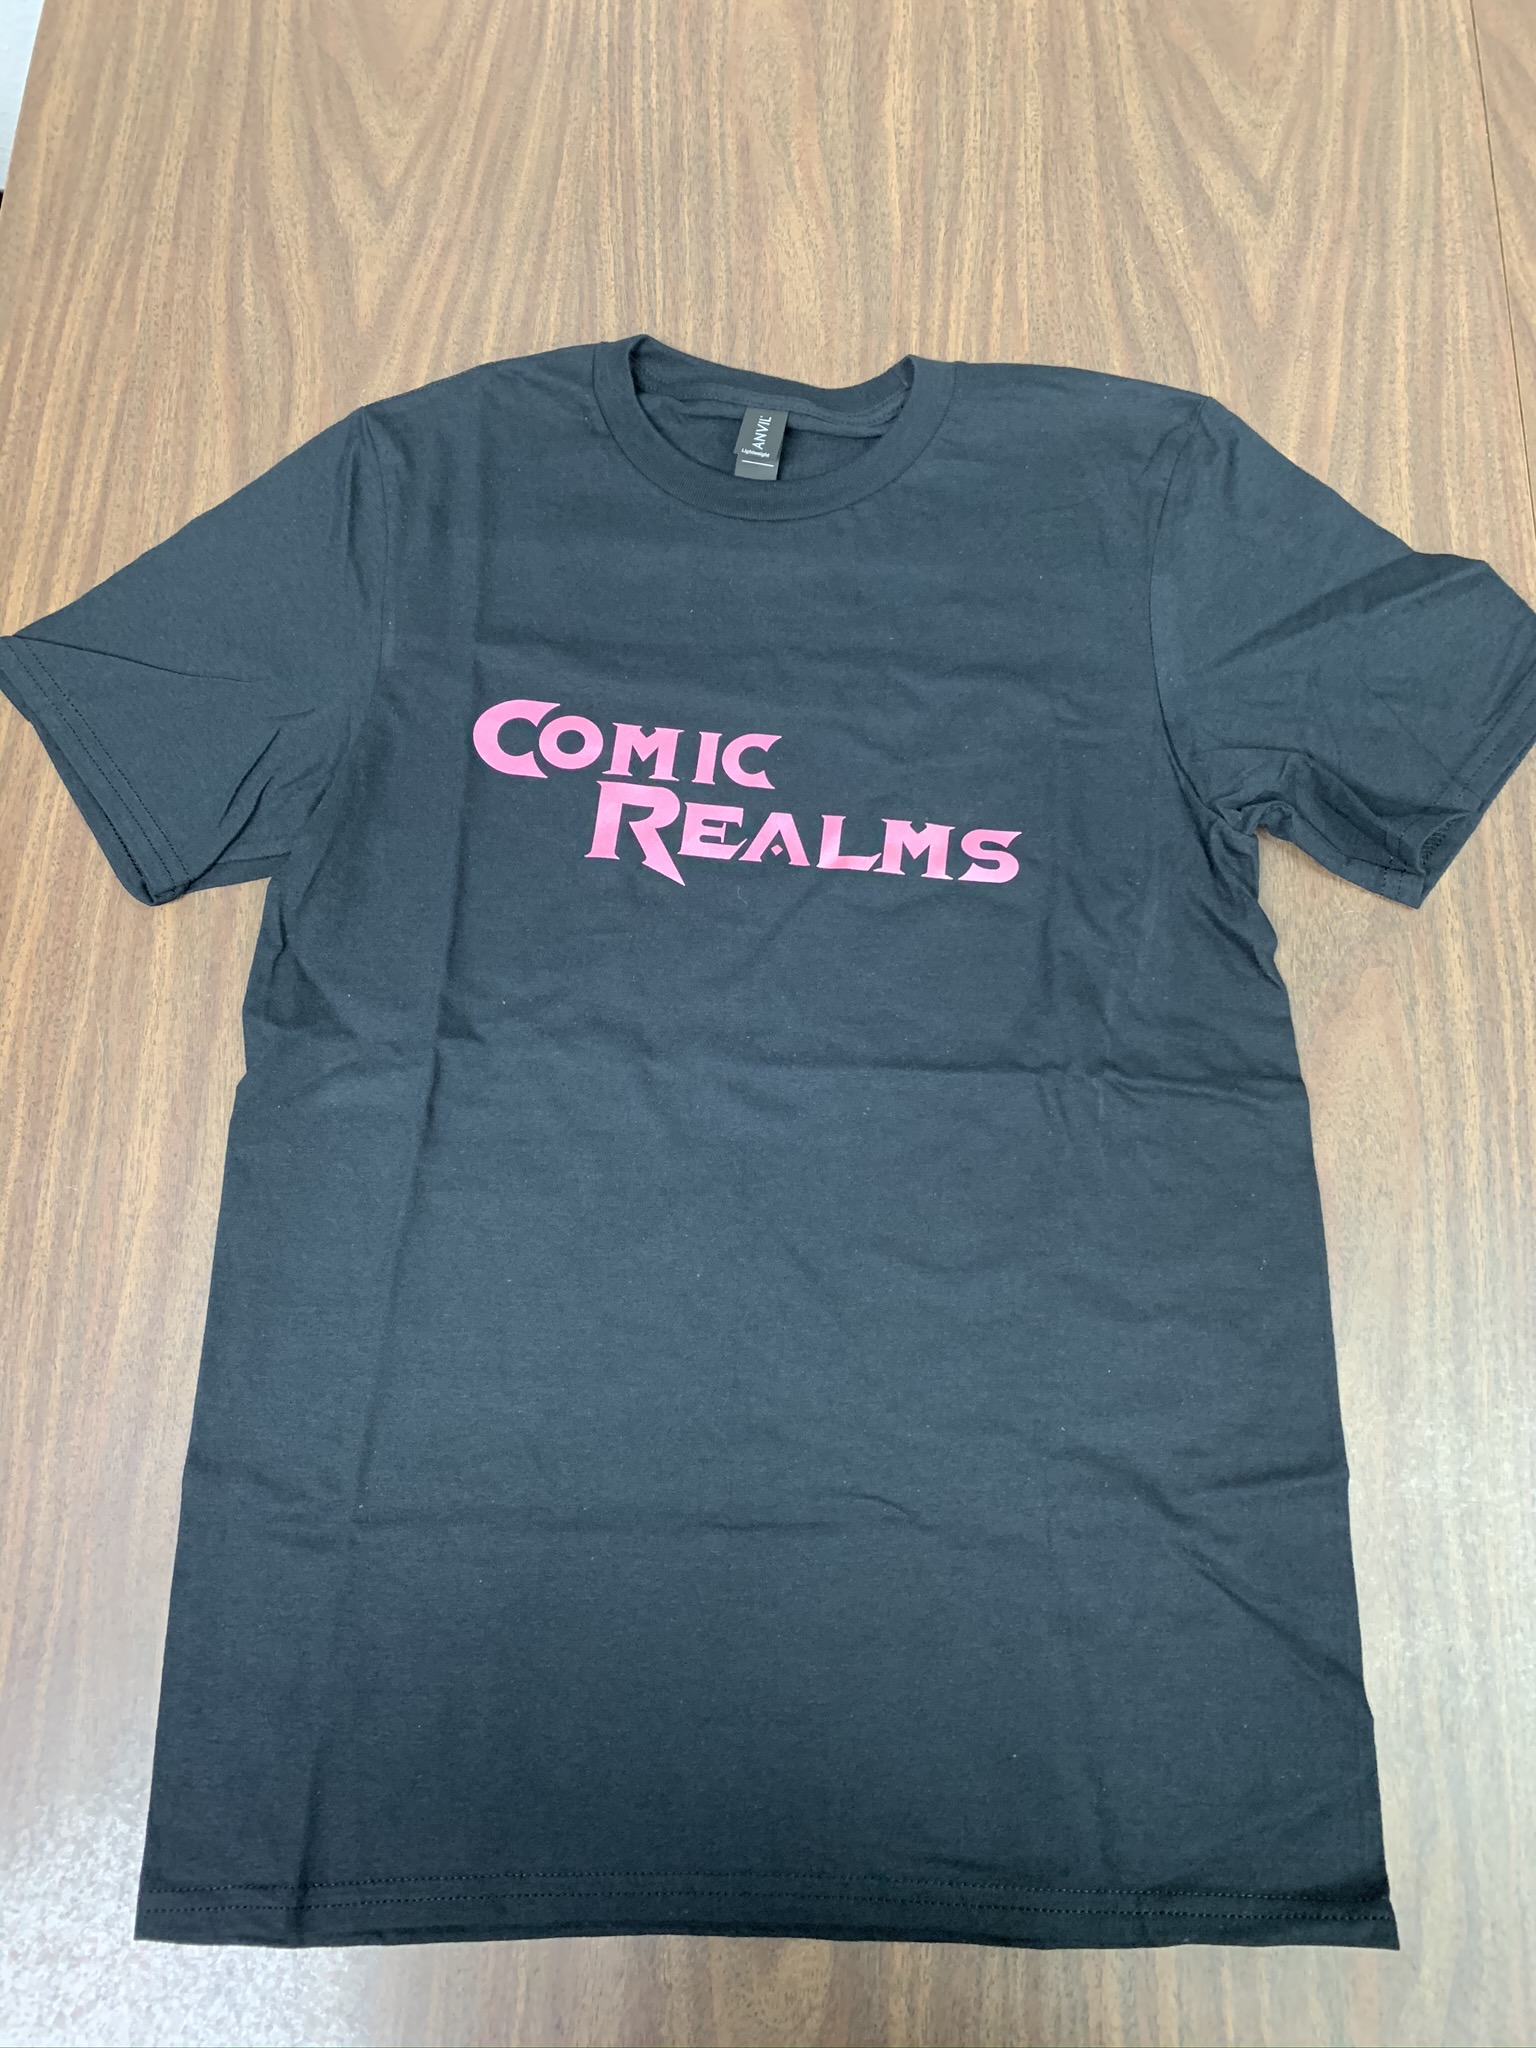 Comic Realms T-Shirt Large Black/Pearl Pink